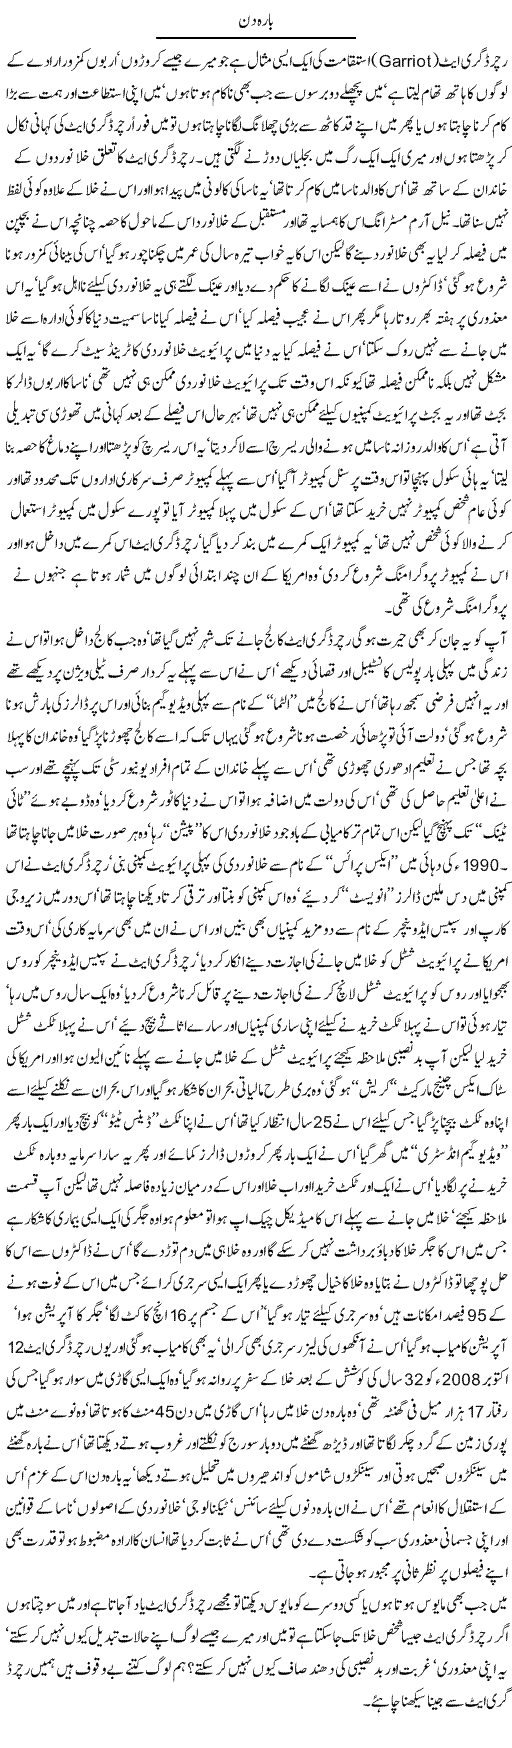 Richard Garriott - Urdu Political Column By Javed Chaudhry